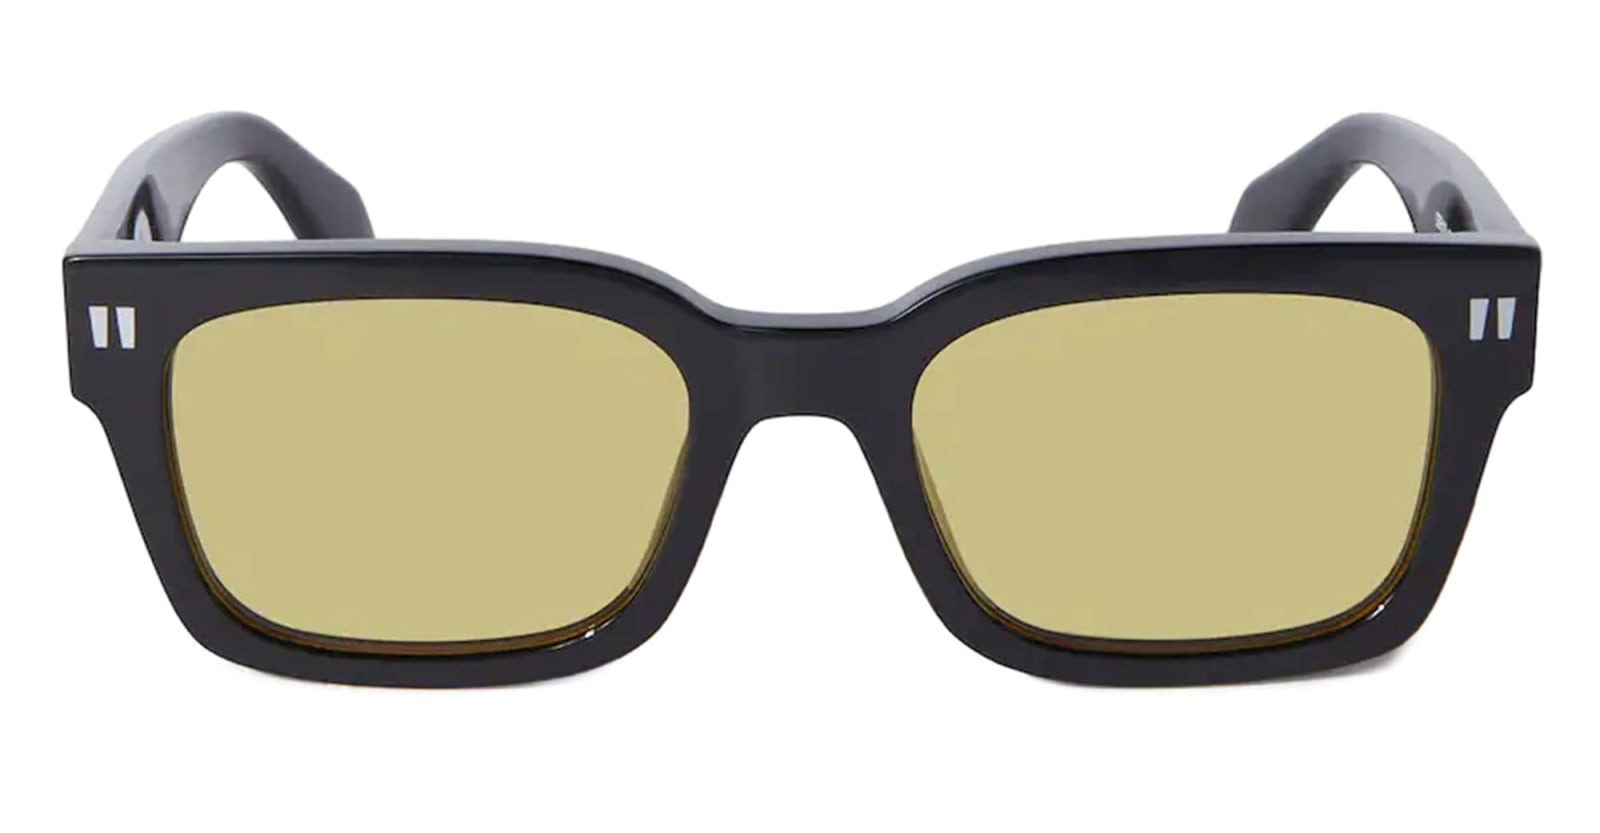 Midland - Black / Yellow Sunglasses